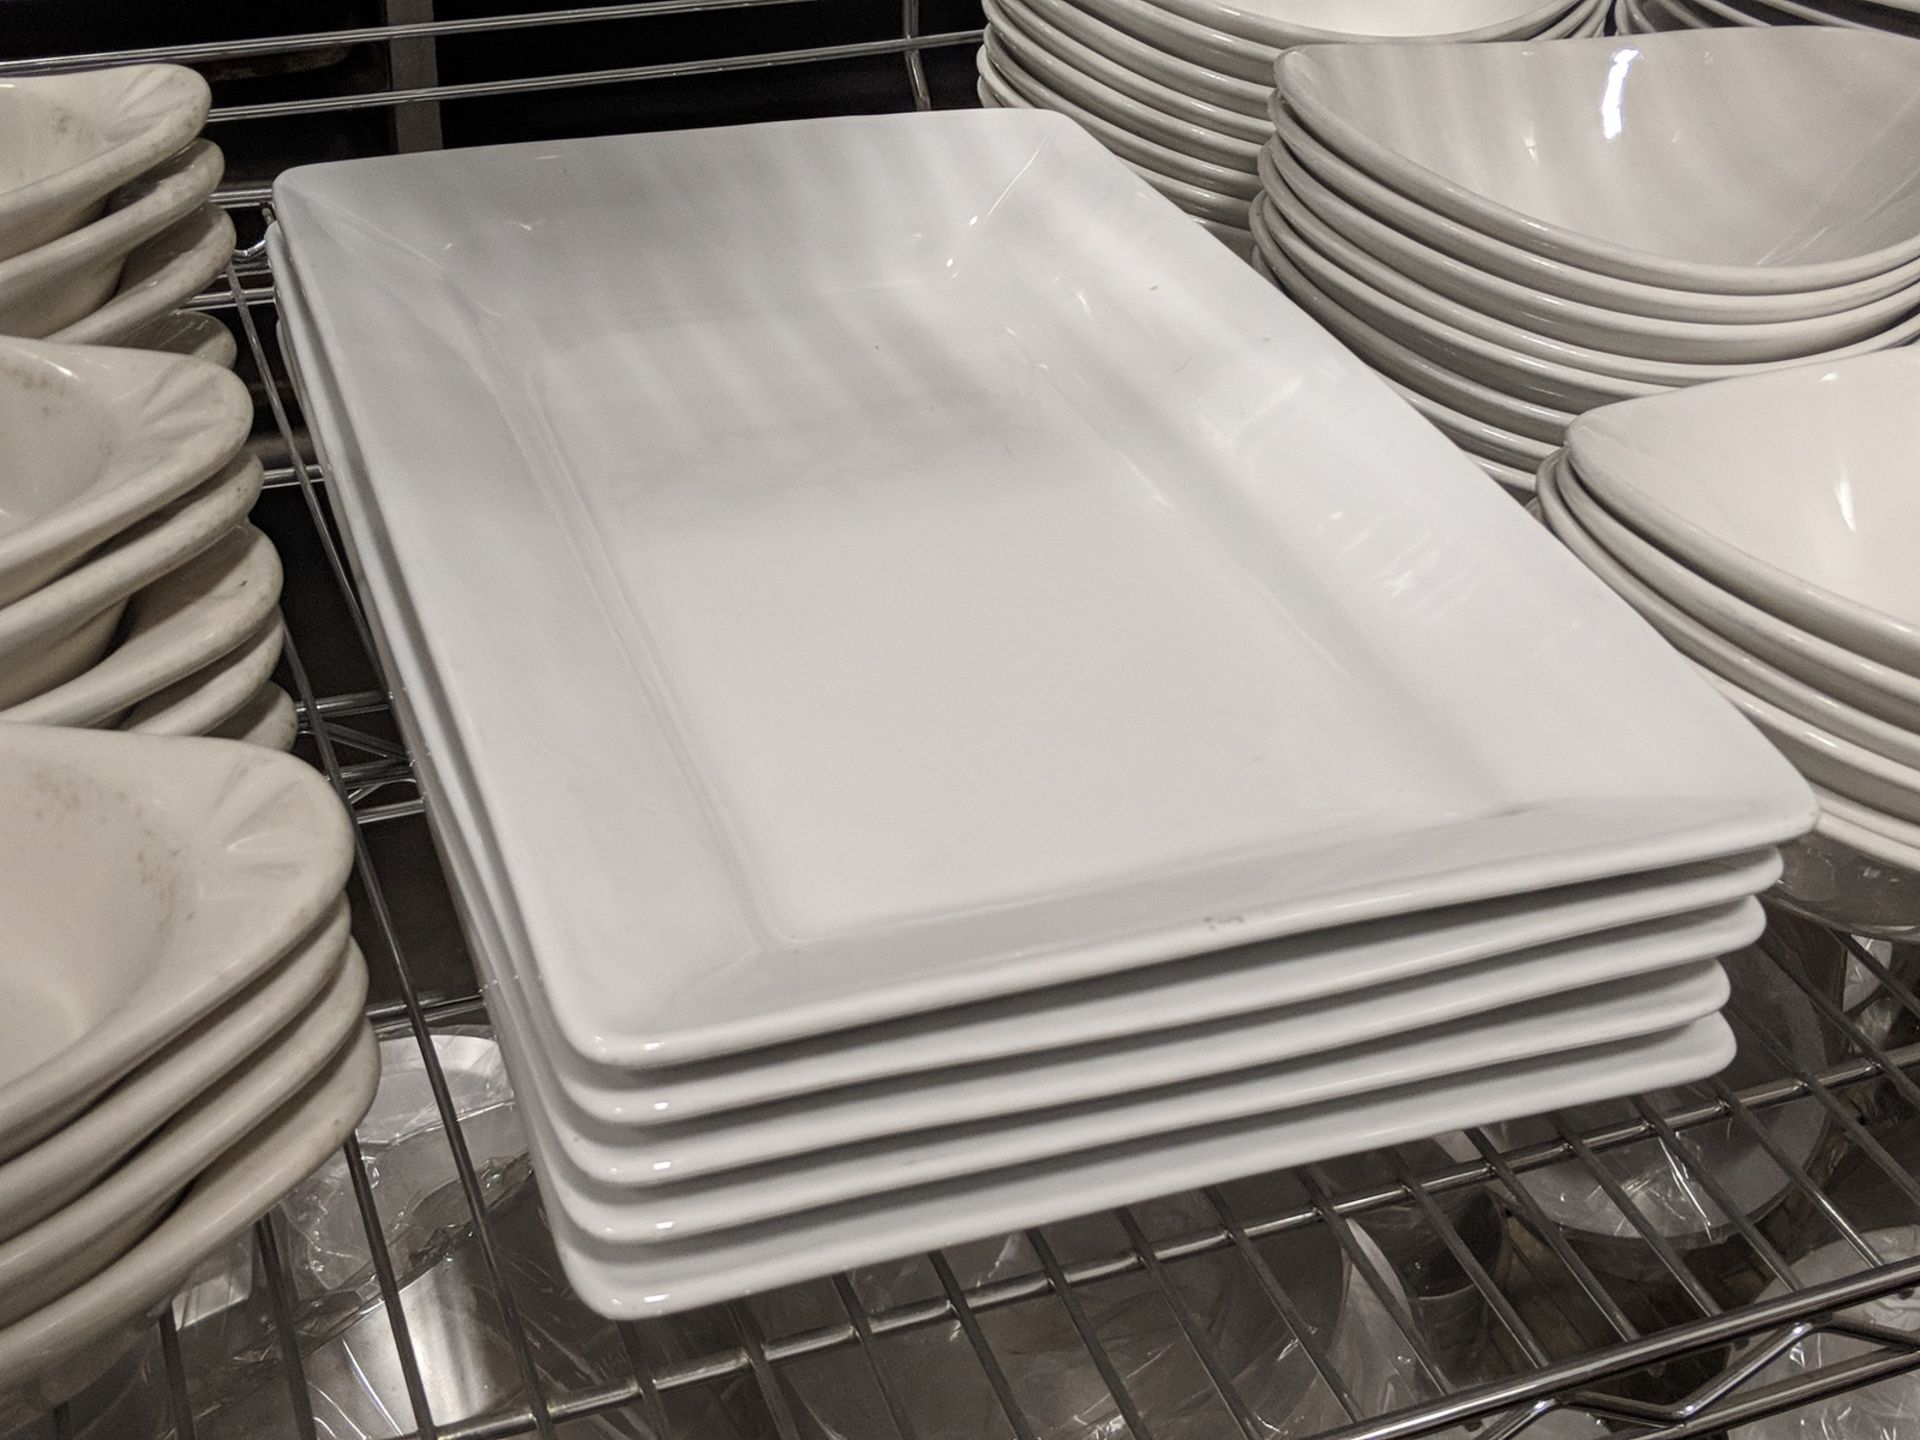 14.5" x 9" Platters - Lot of 5